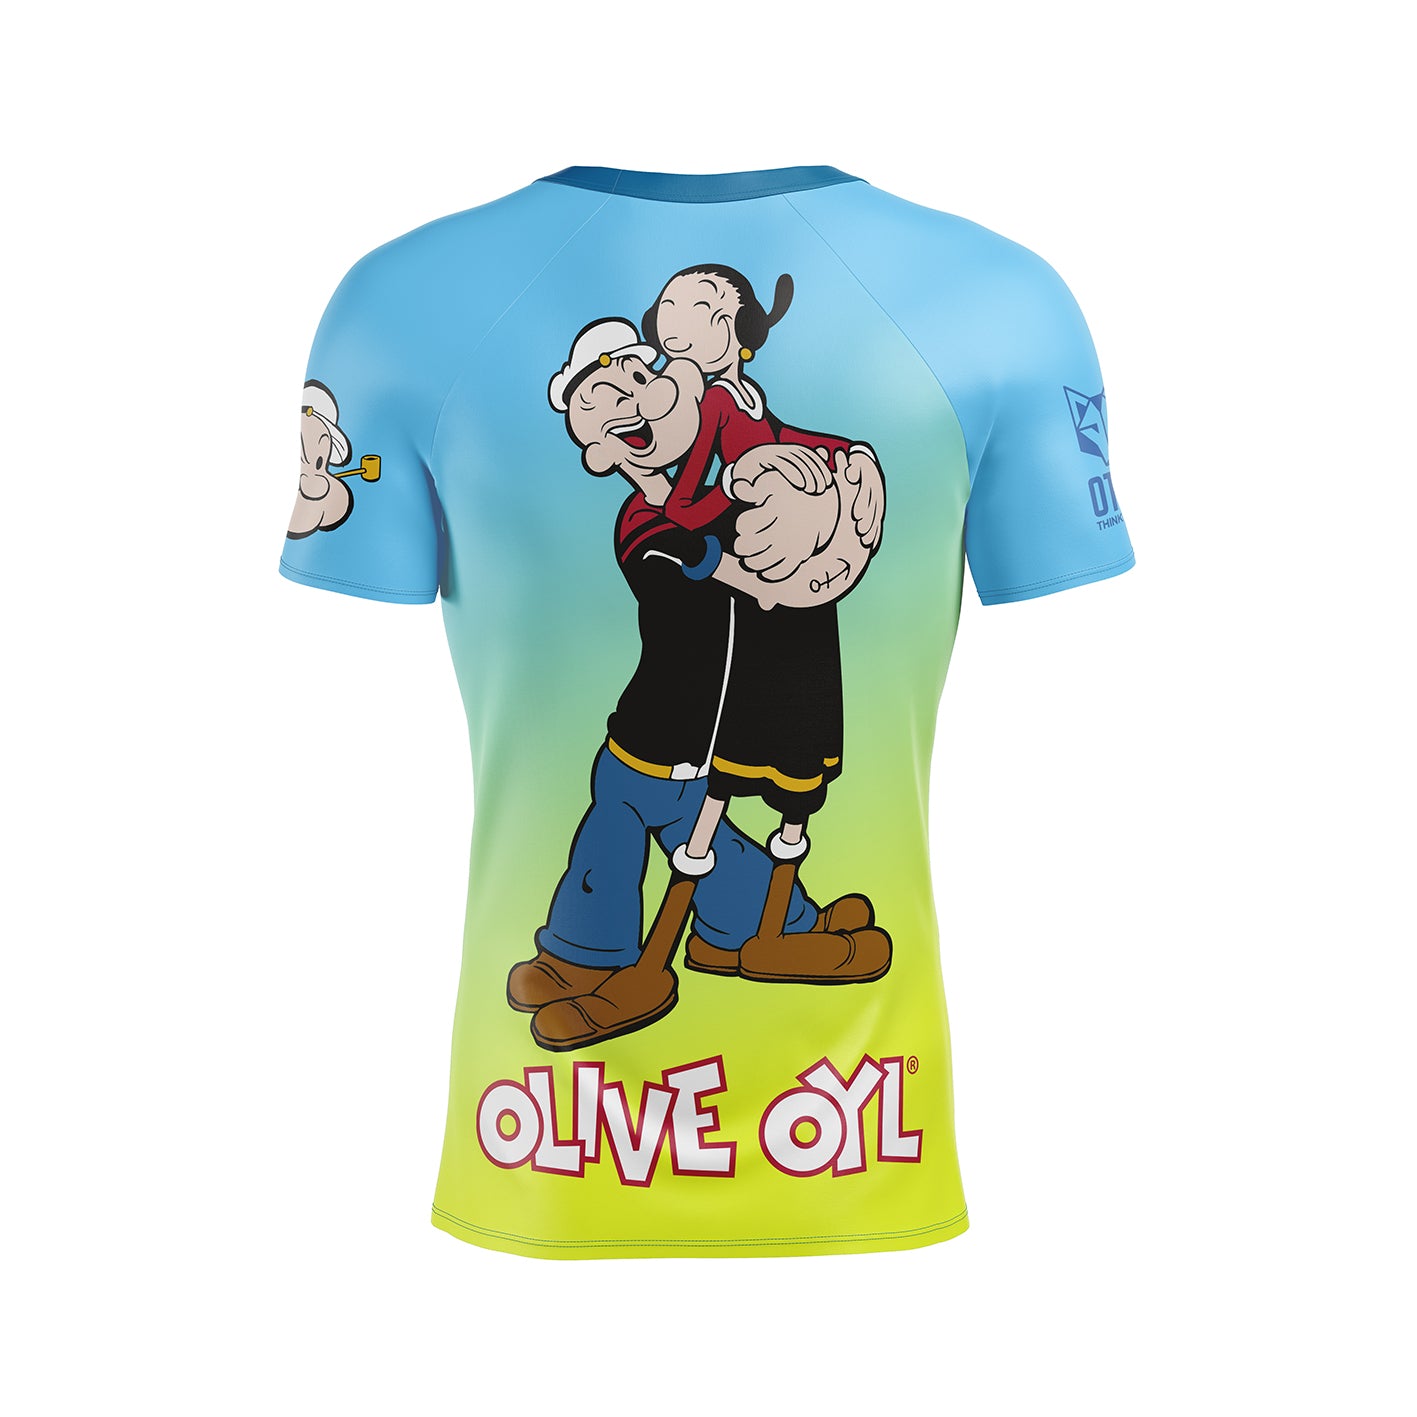 Camiseta manga corta hombre - Popeye & Olive